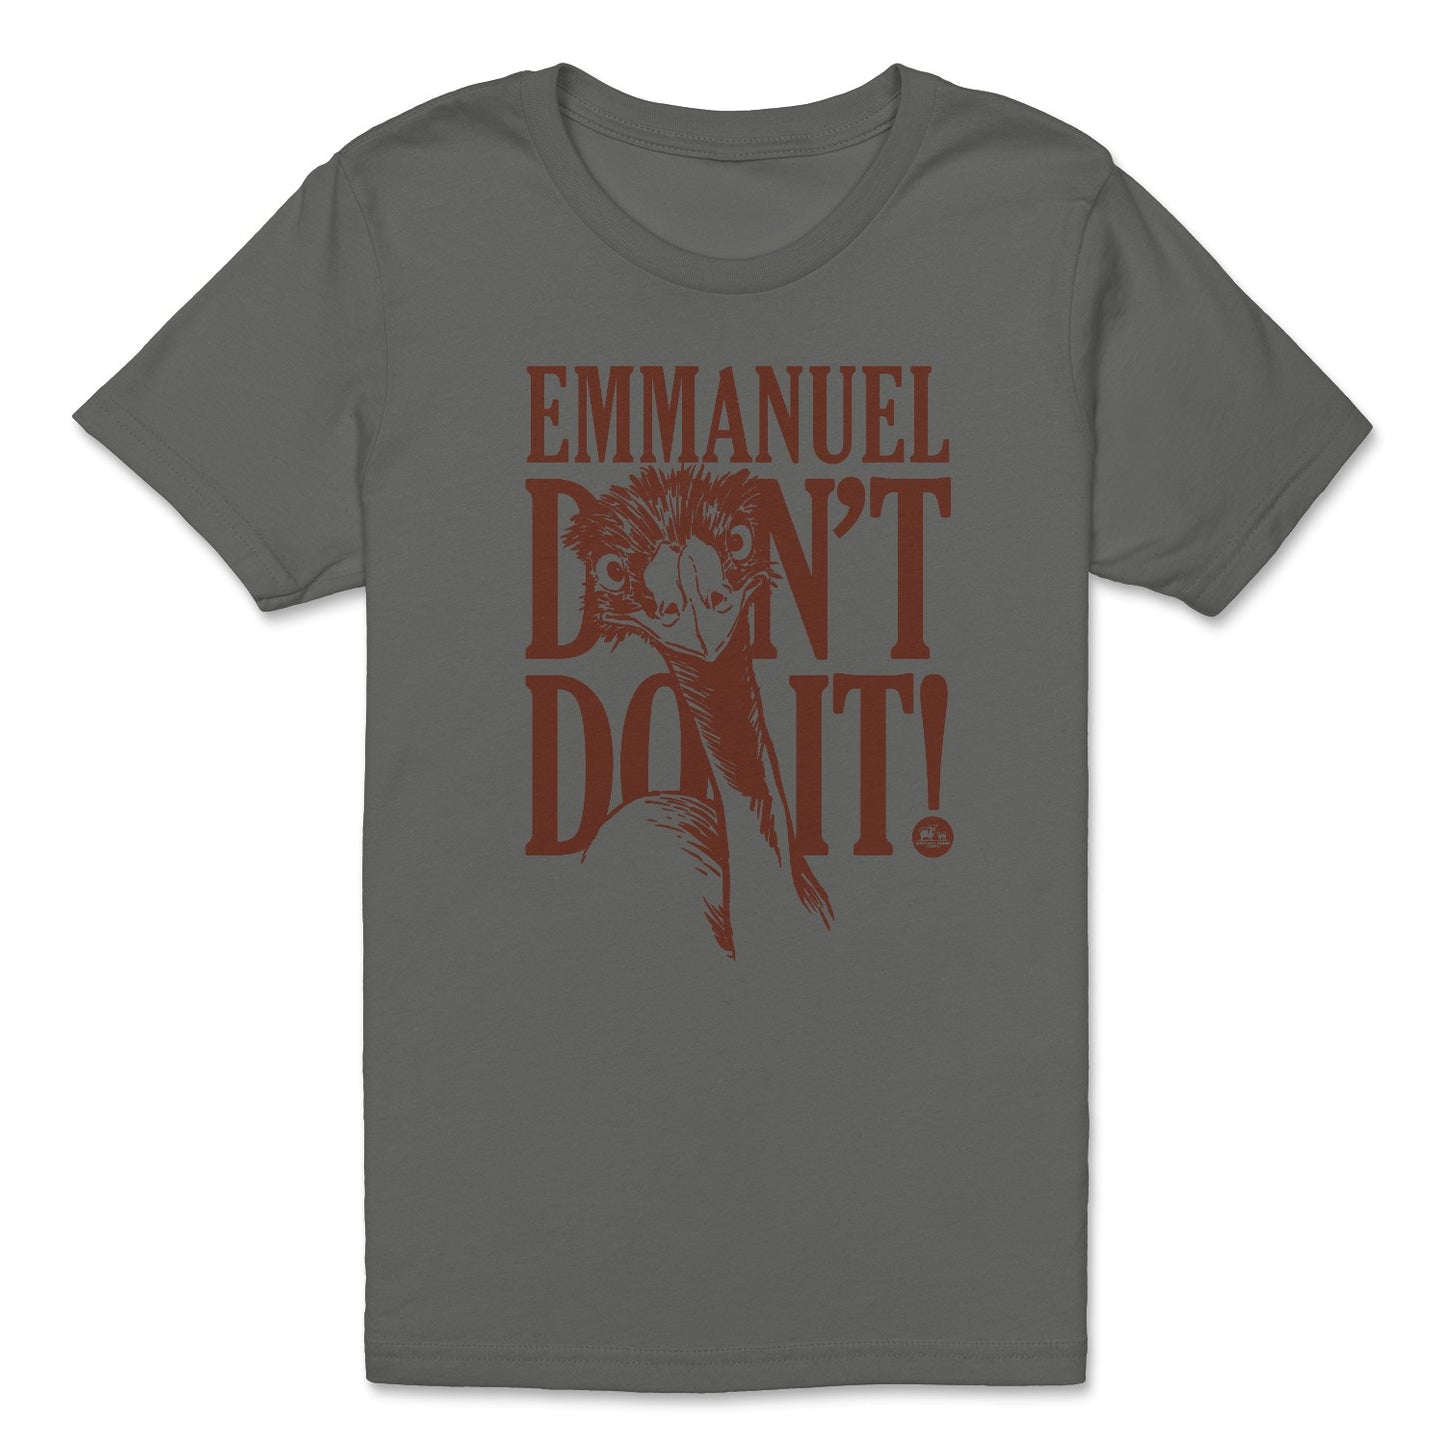 YOUTH "Emmanuel Don't Do It" Tee